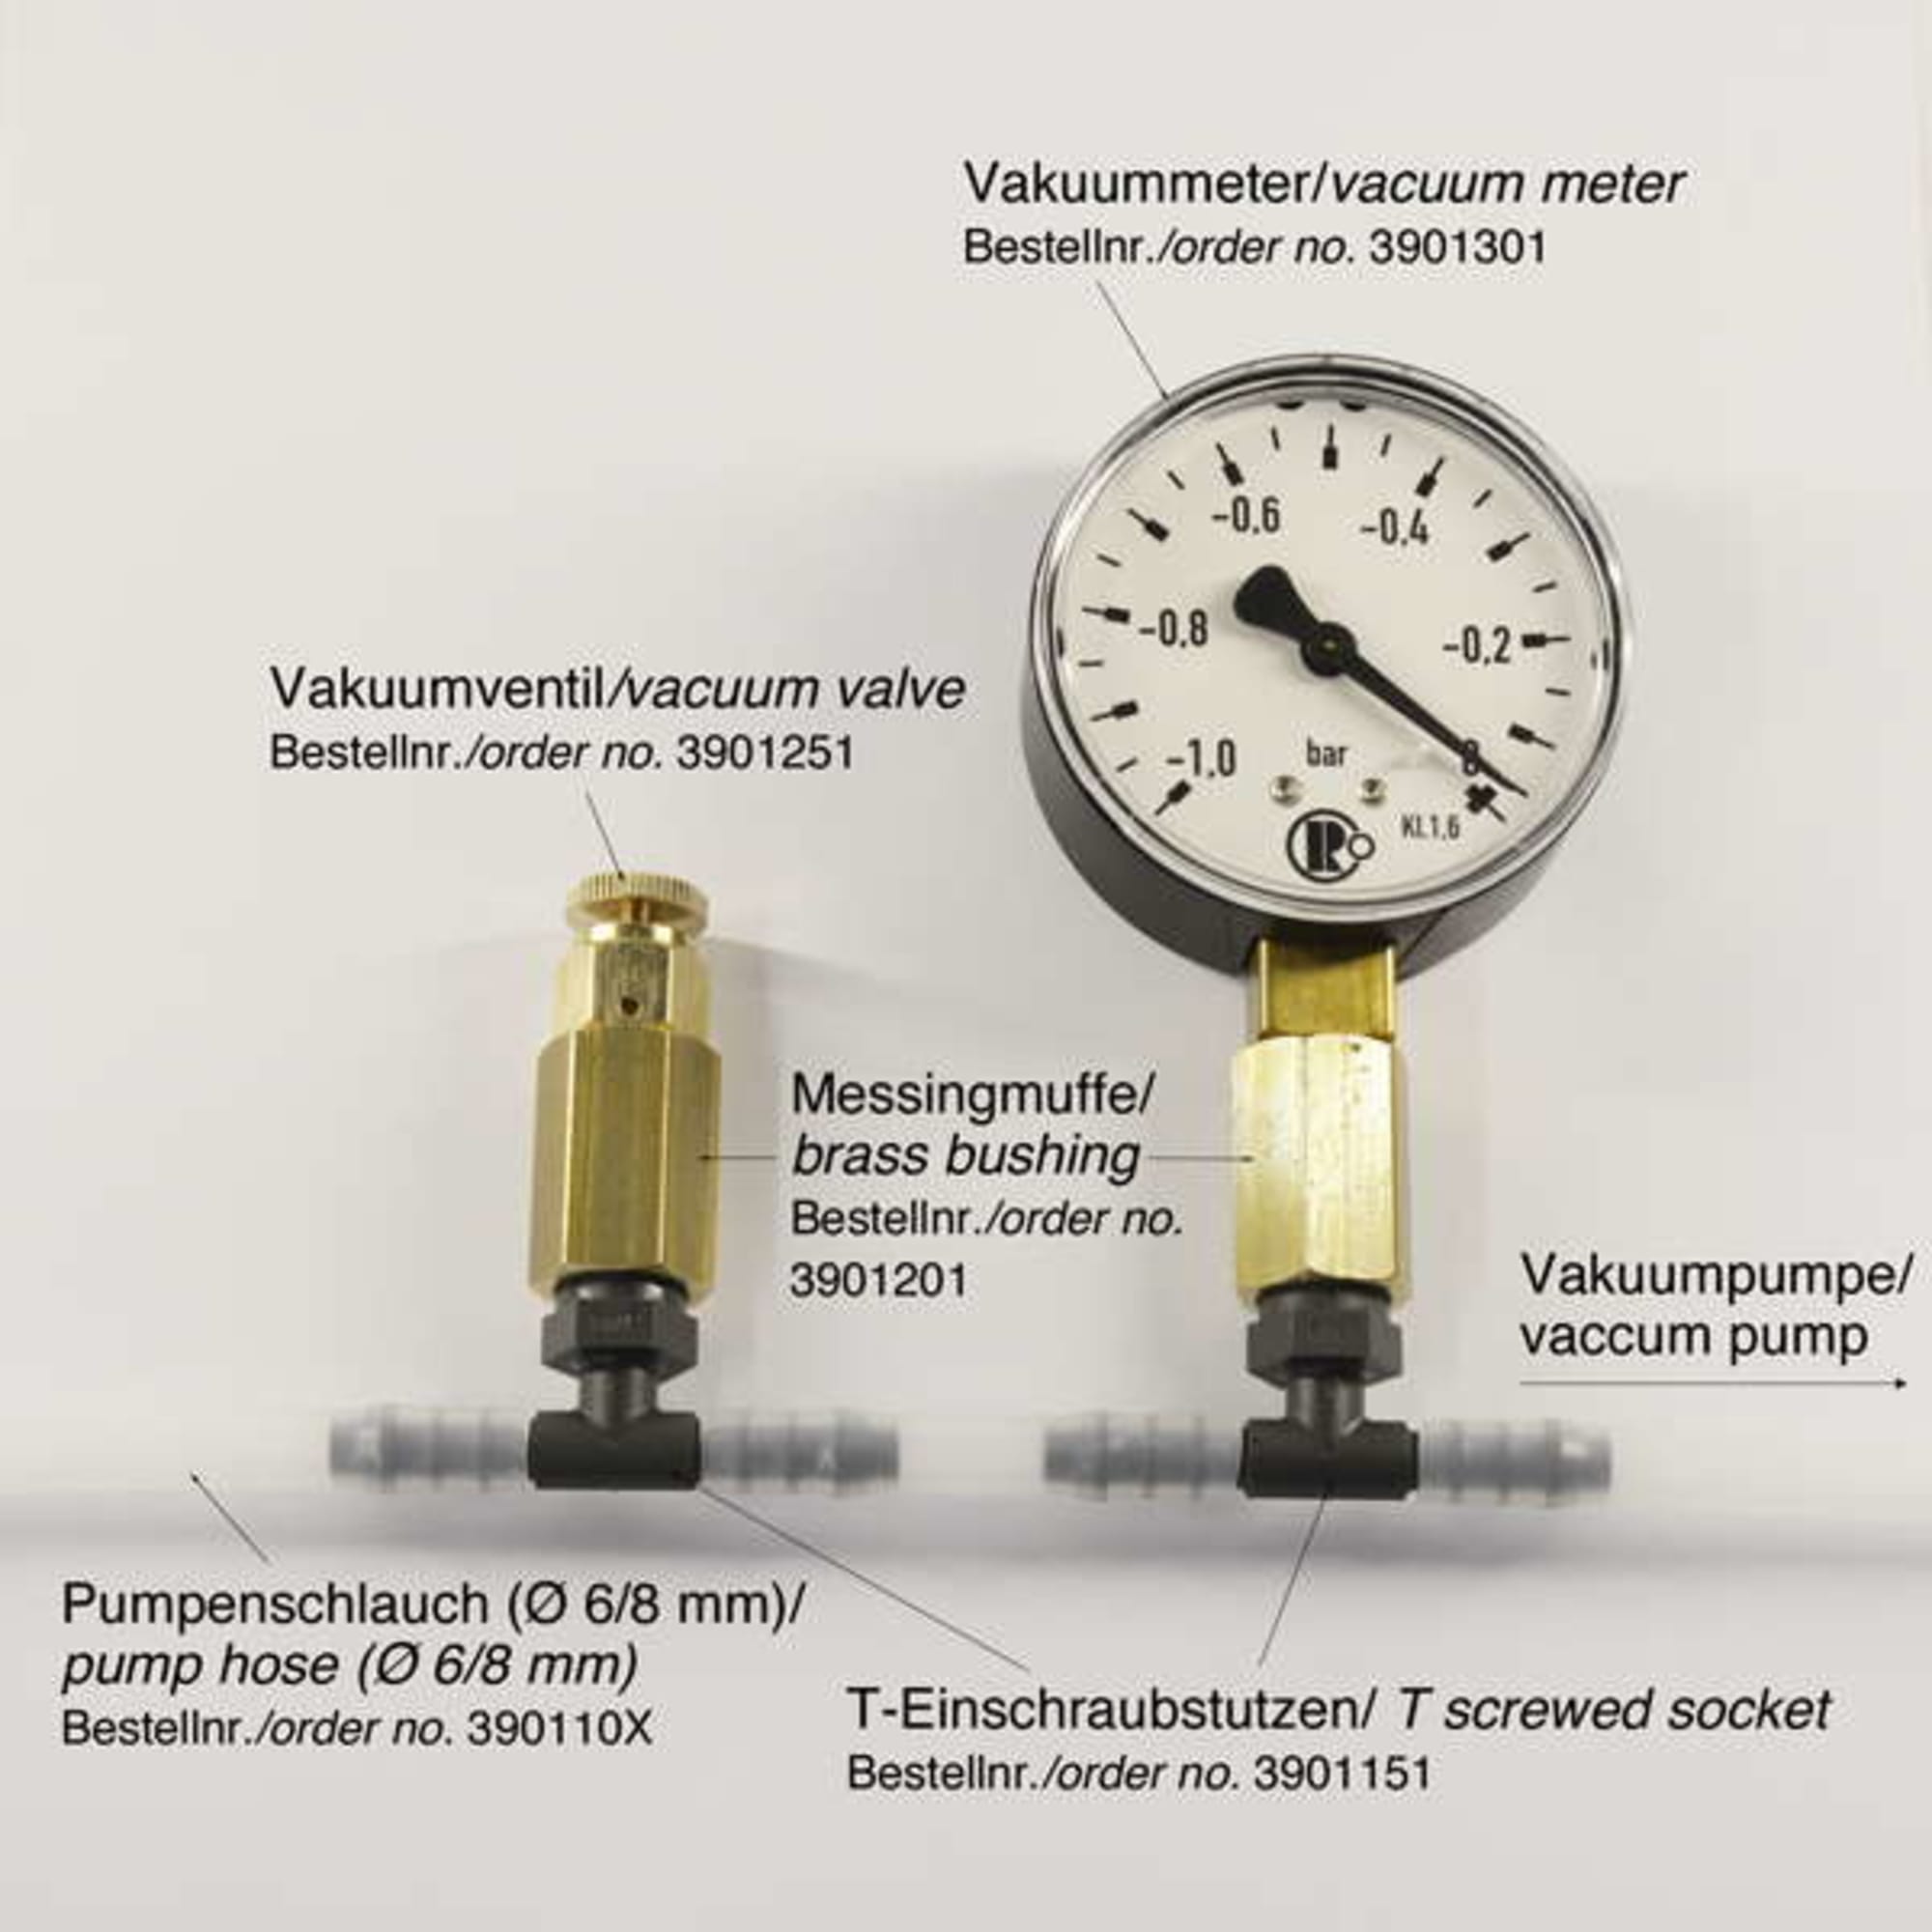 Vacuum meter, image 3